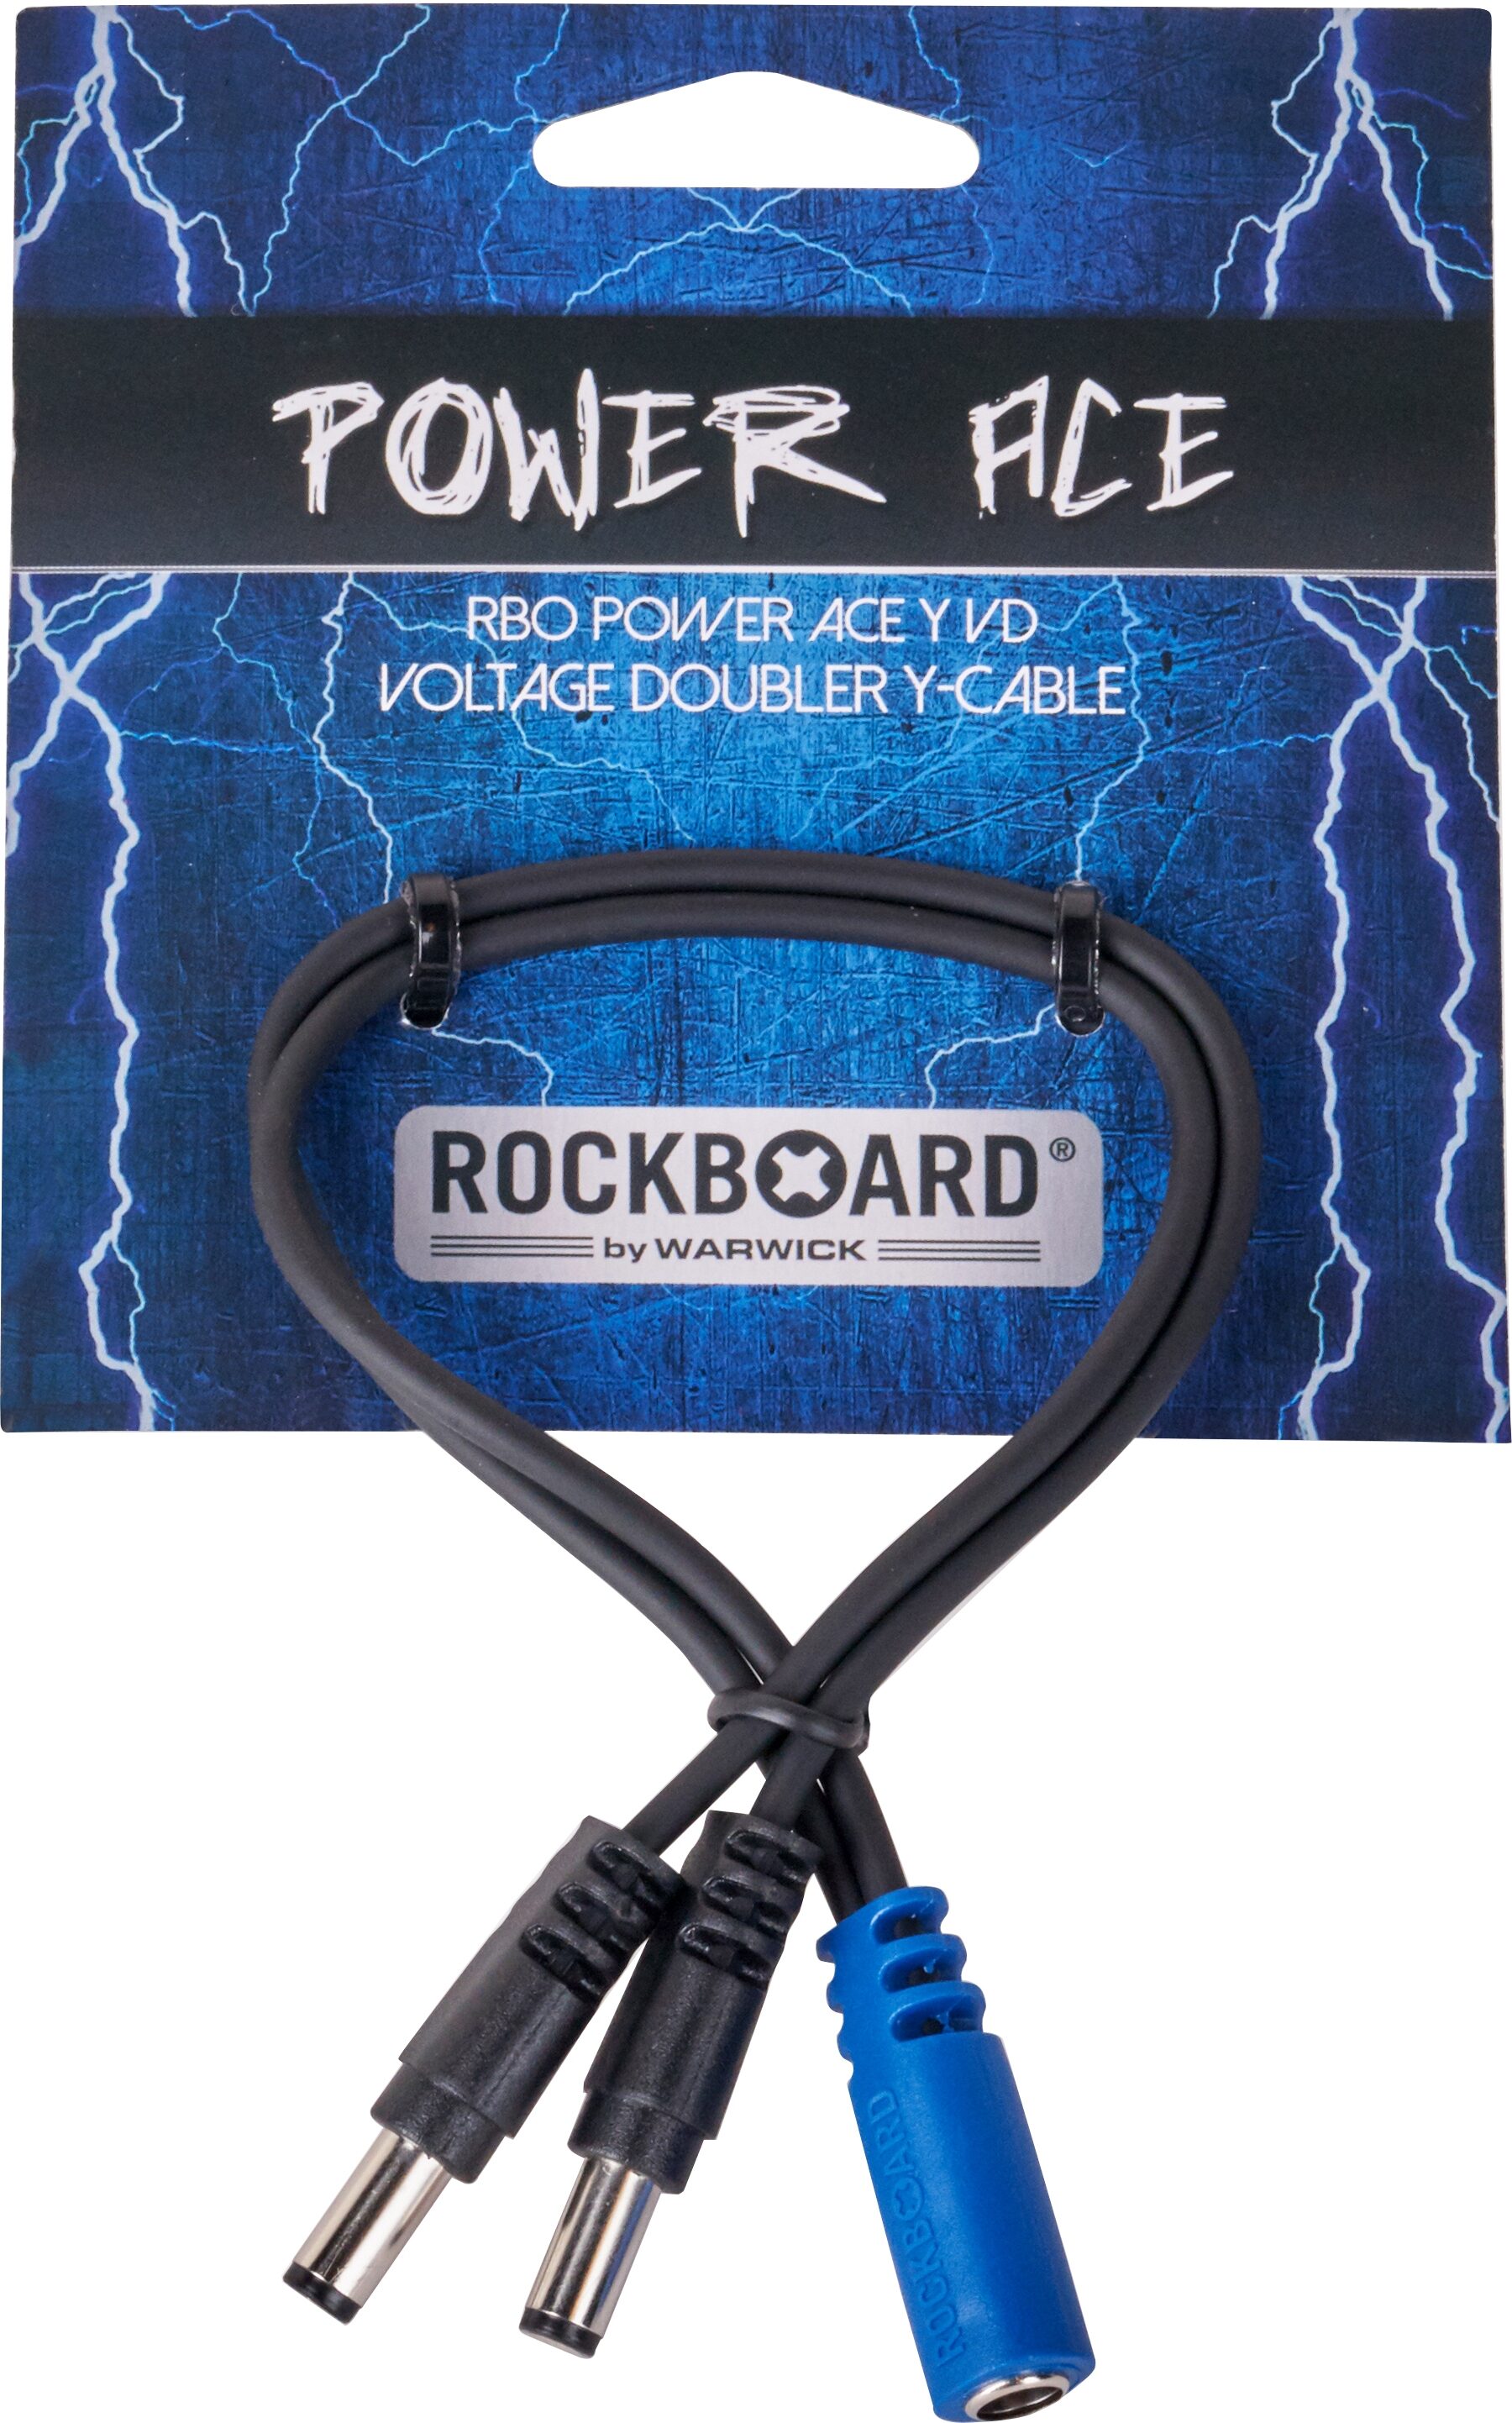 Jeugd Kindercentrum Extreem belangrijk RockBoard Power Ace Voltage Doubler Y Cable | zZounds